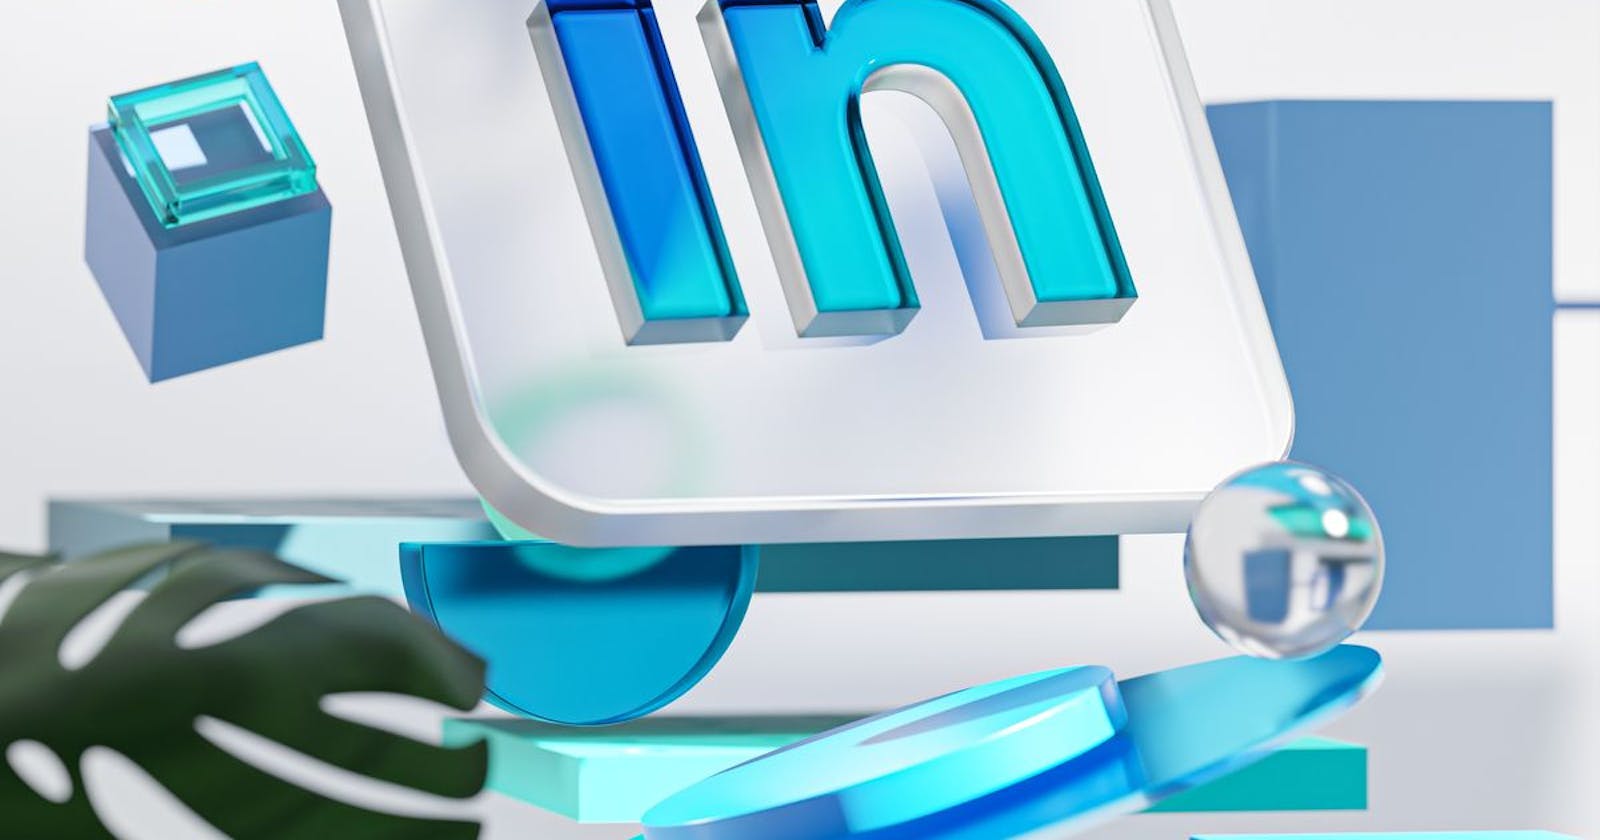 How to scrape LinkedIn profiles and companies